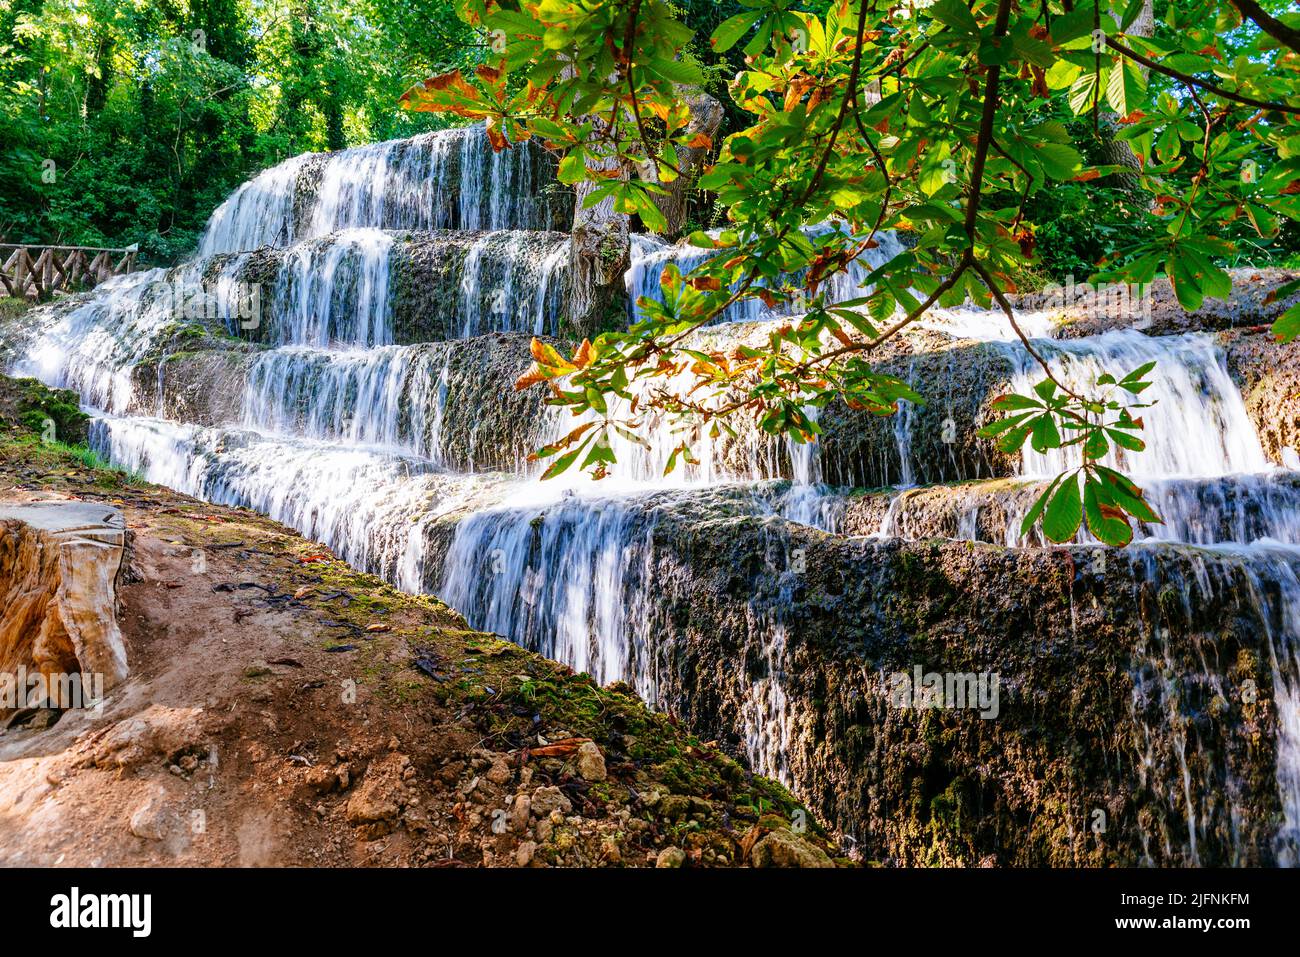 The waterfall called 'Los Fresnos Bajos'. Natural Park of the Monasterio de Piedra - Stone Monastery. Nuévalos, Zaragoza, Aragón, Spain, Europe Stock Photo